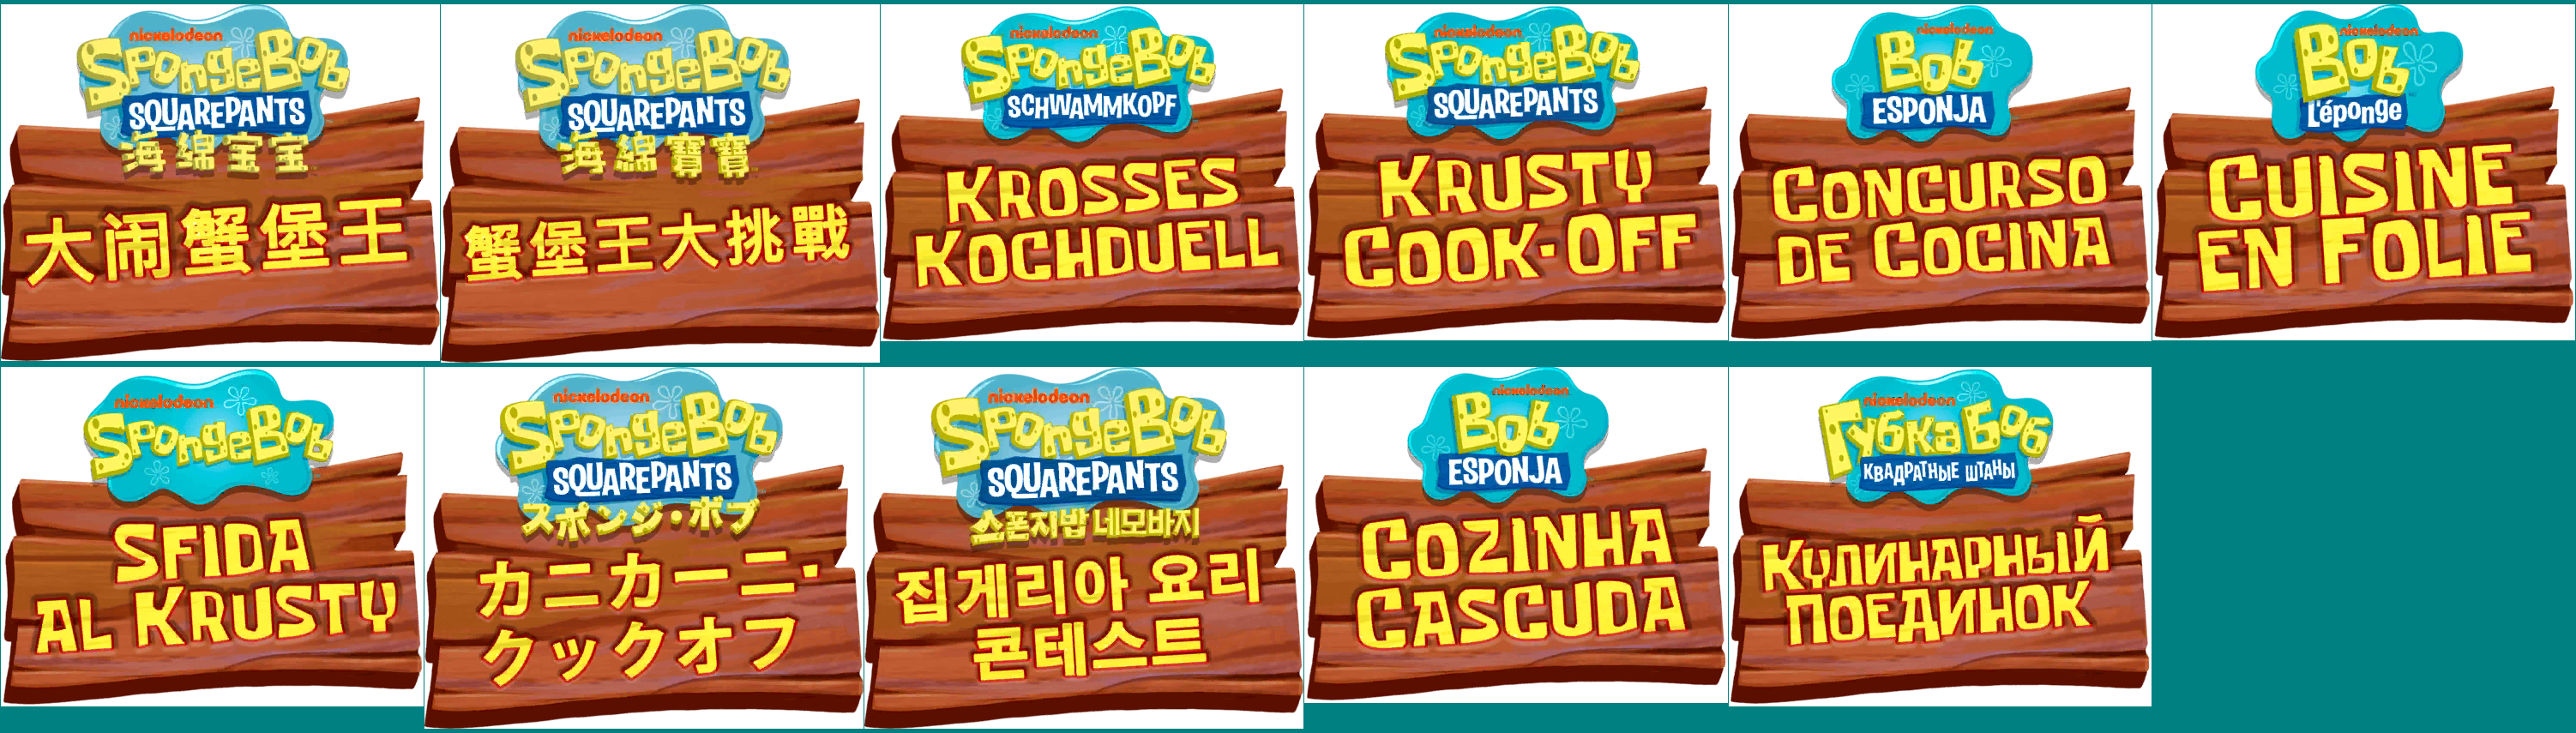 SpongeBob: Krusty Cook-Off - Logo